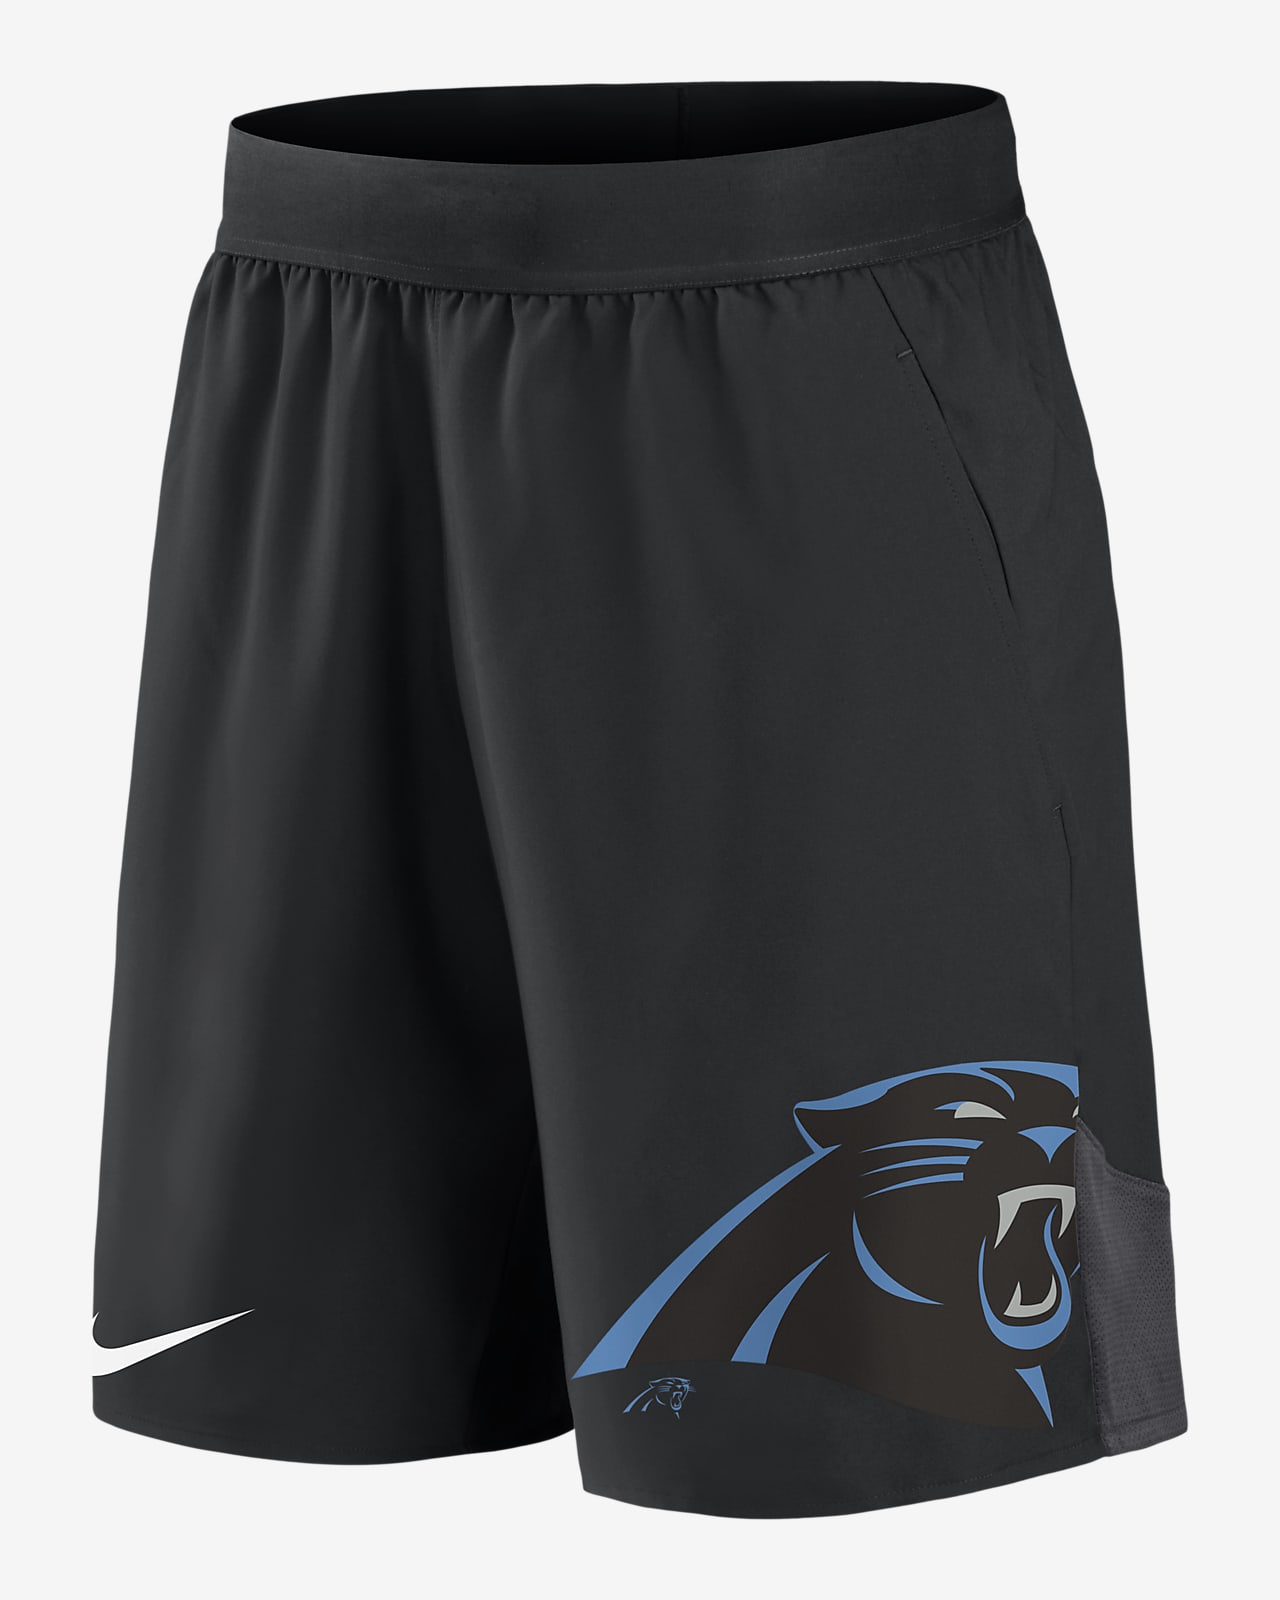 Nike Dri-FIT Stretch (NFL Carolina Panthers) Men's Shorts